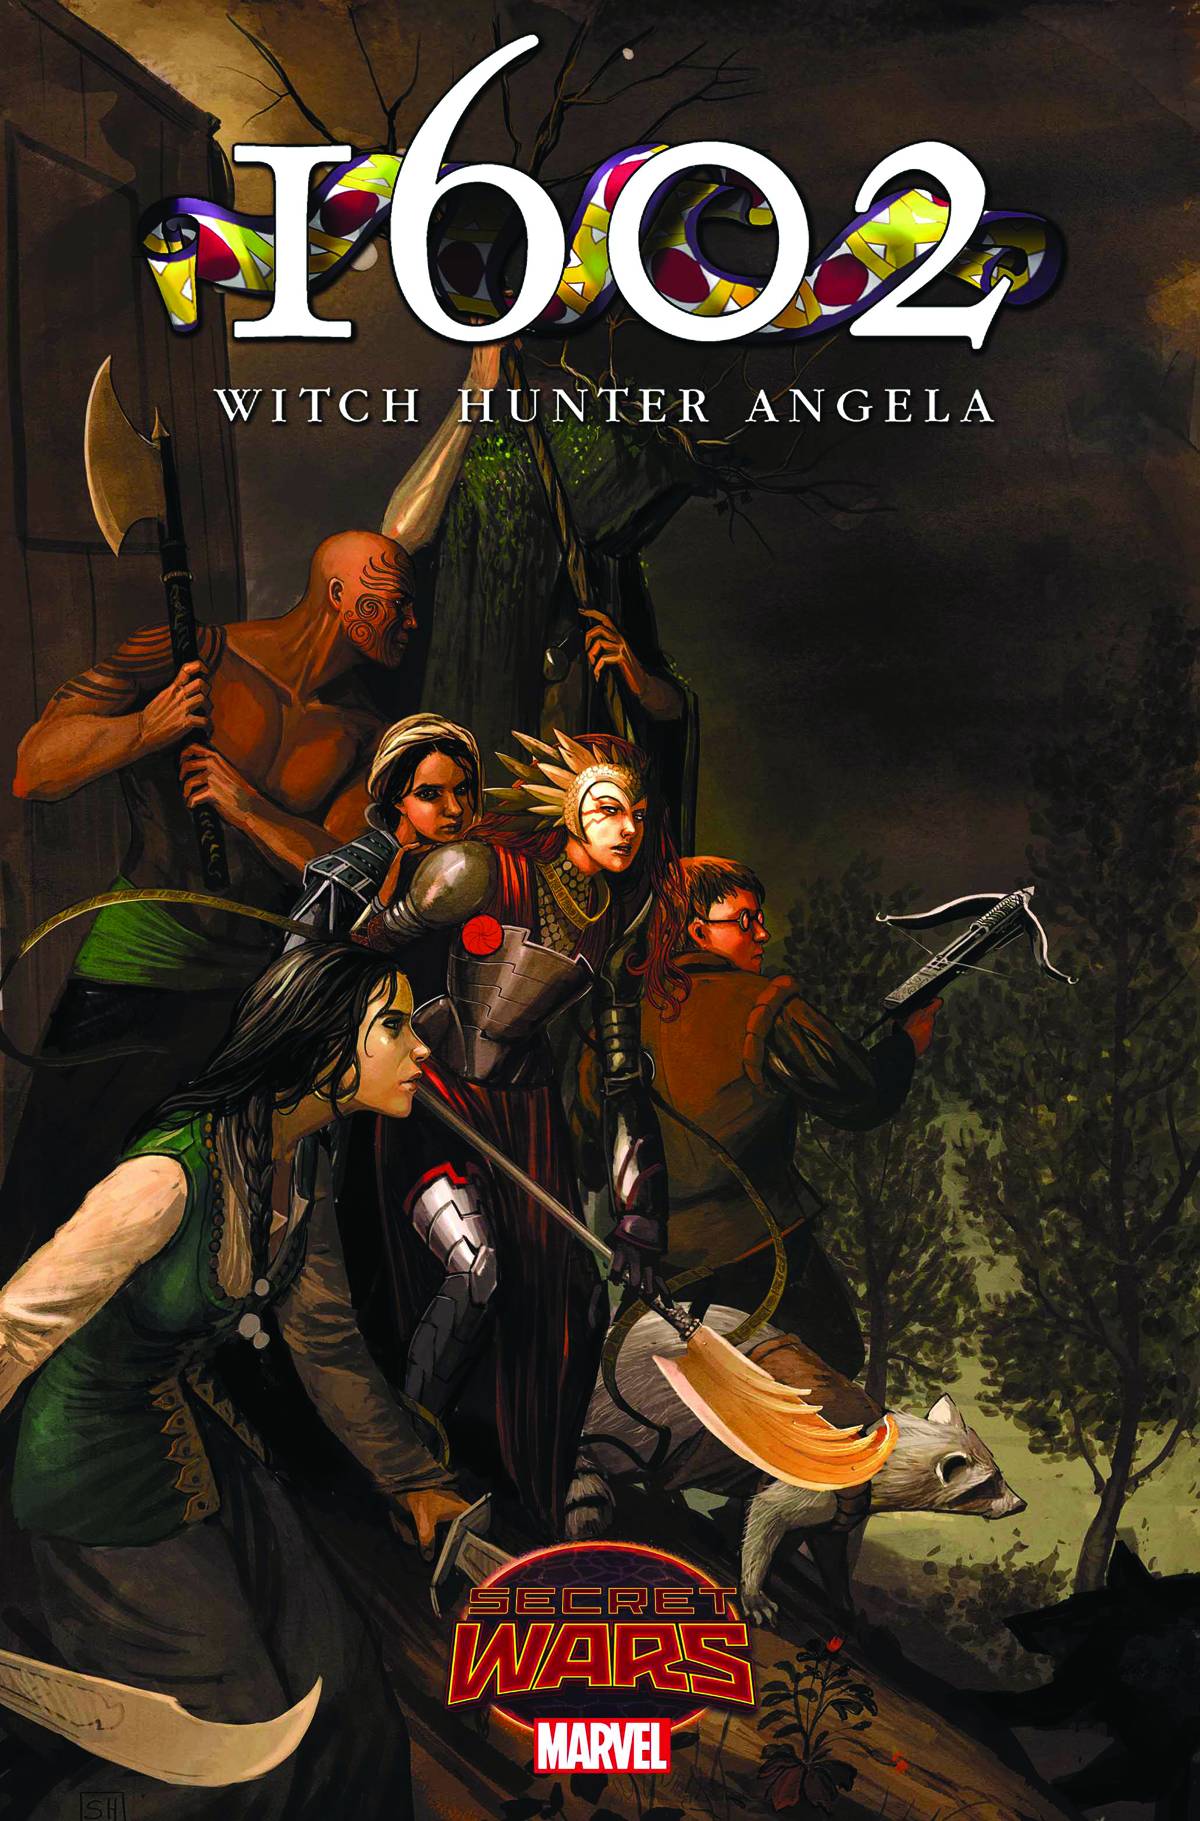 1602 Witch Hunter Angela #2 (2015)